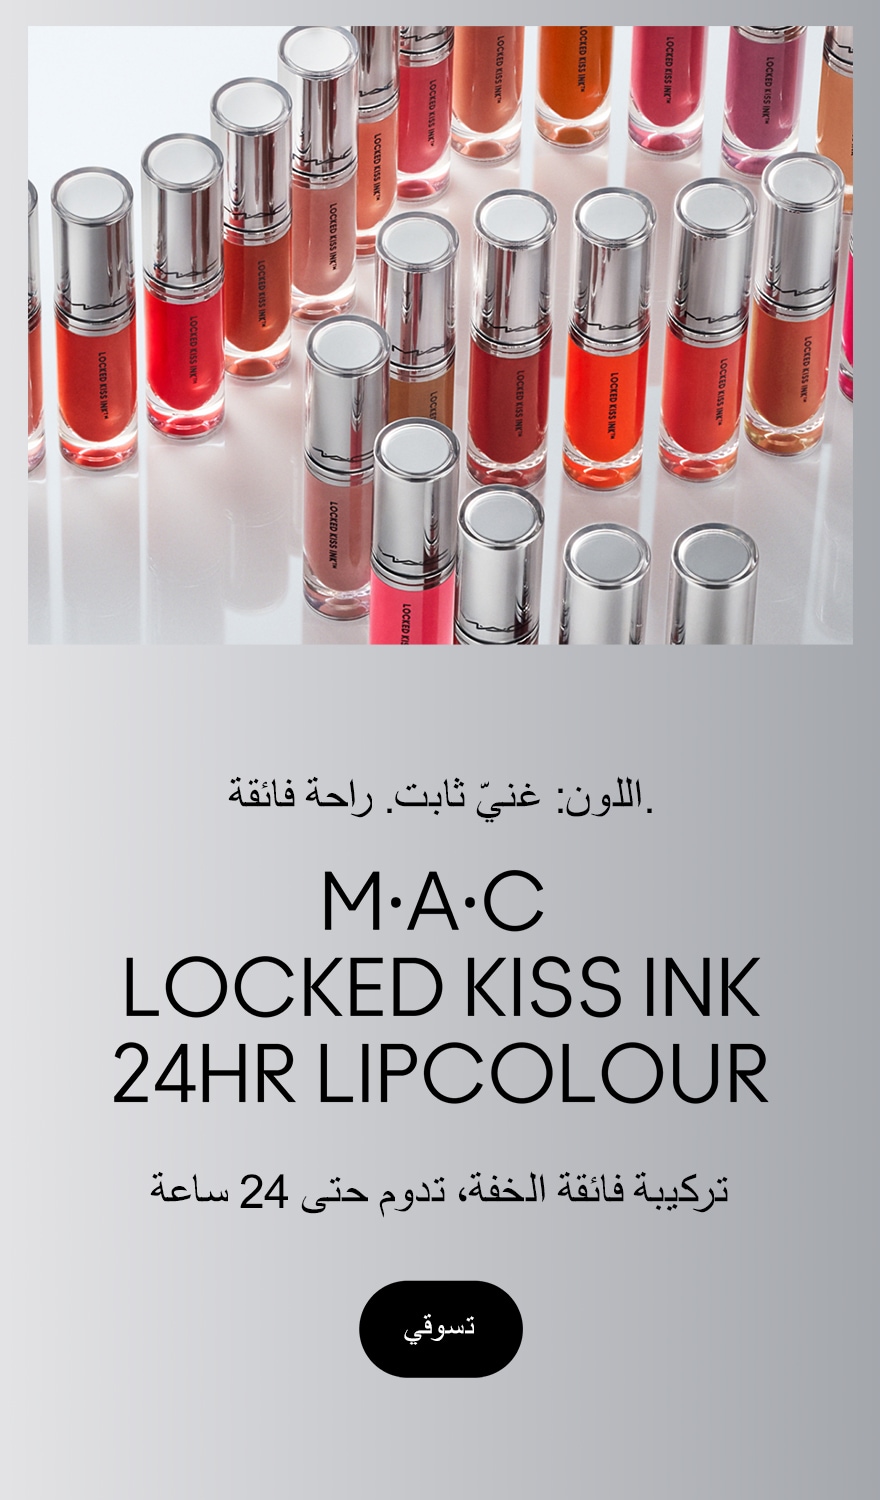 M·A·C LOCKED KISS INK